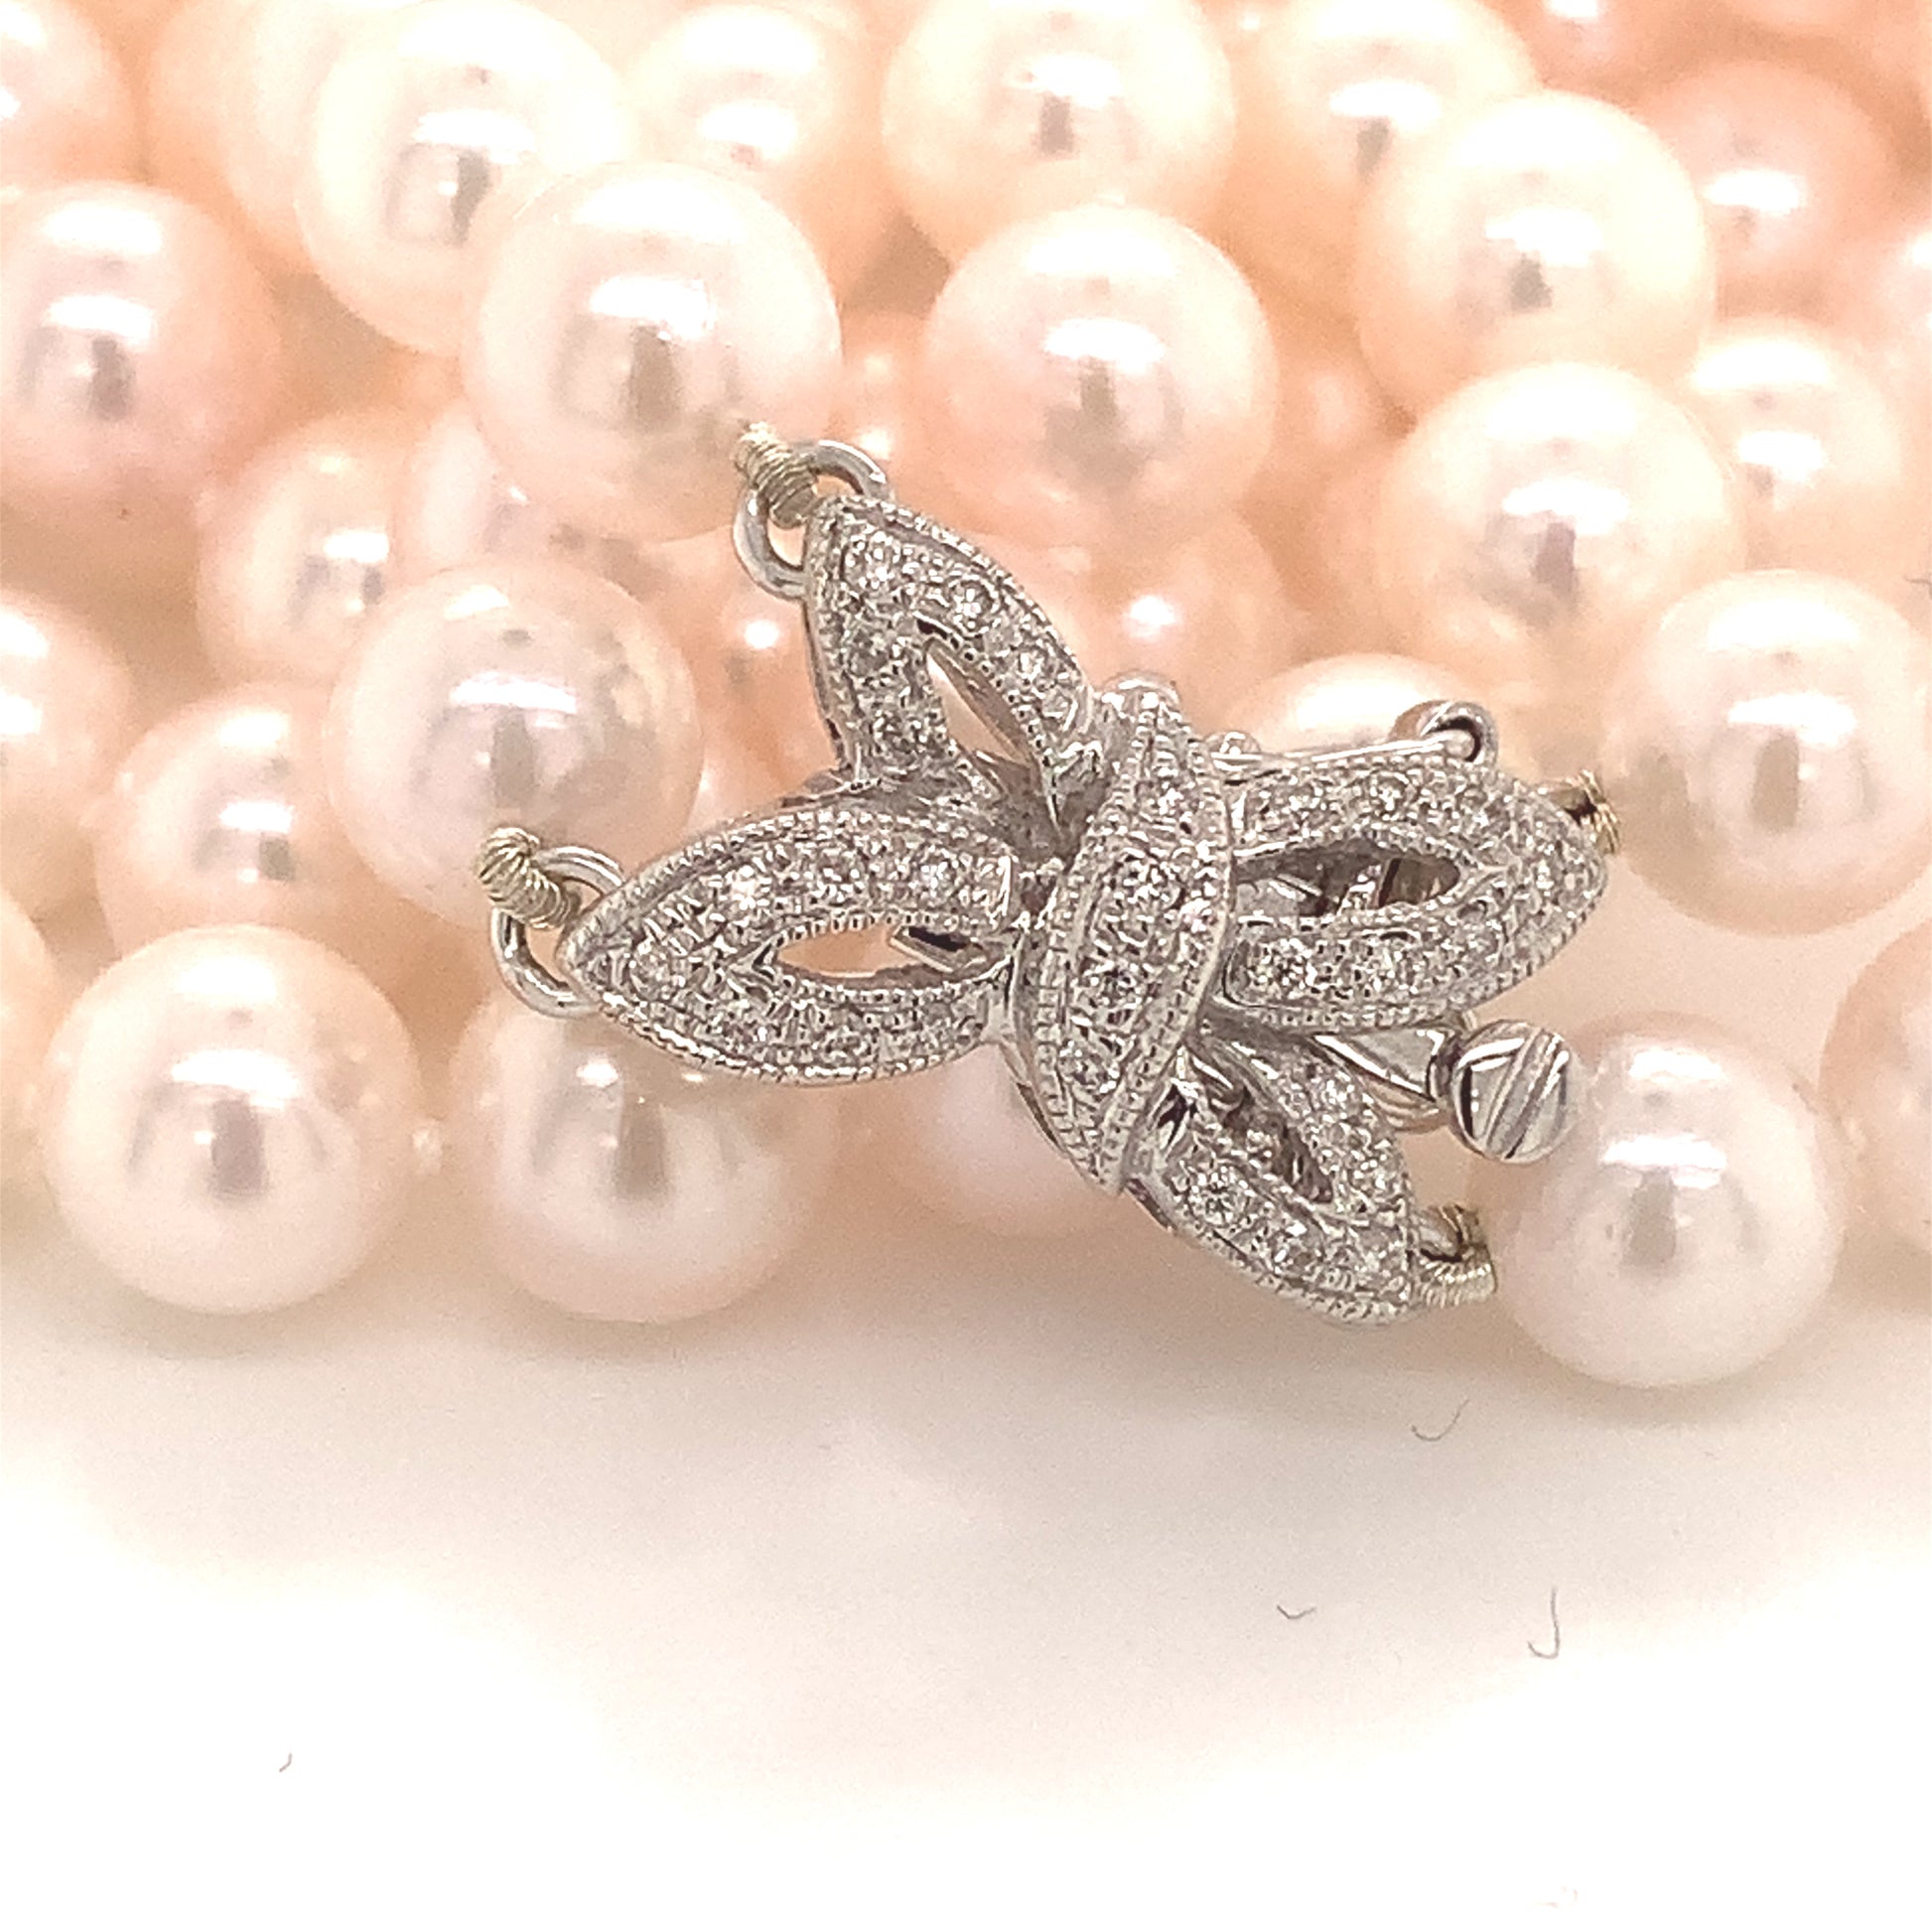 Diamond Akoya Pearl Necklace 18" 14k Gold 6.5 mm Certified $5,950 117515 - Certified Estate Jewelry